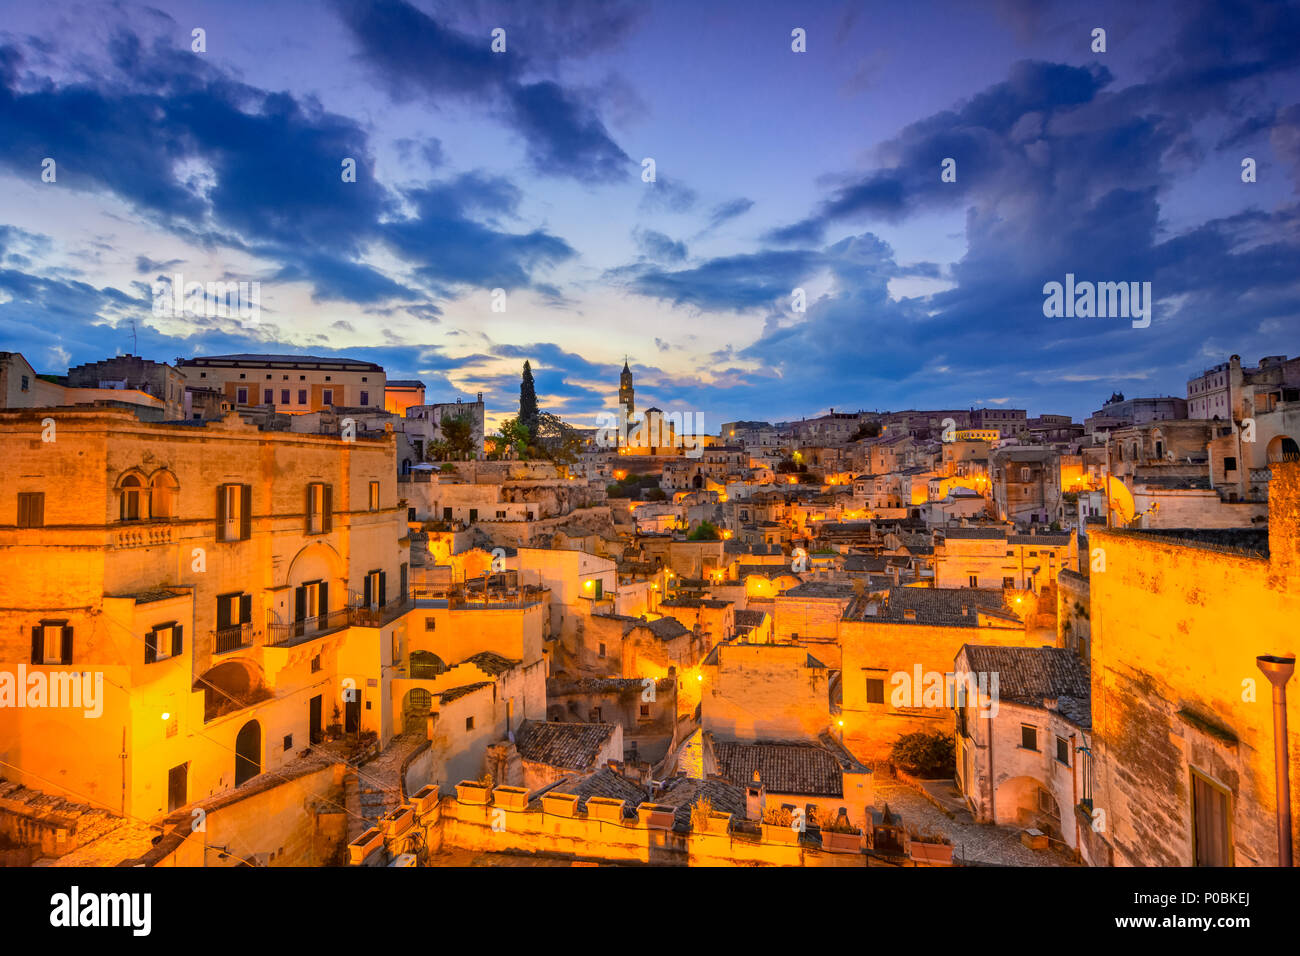 Matera, Basilicata, Italy: Night view of the old town - Sassi di Matera, European Capital of Culture, at dawn Stock Photo